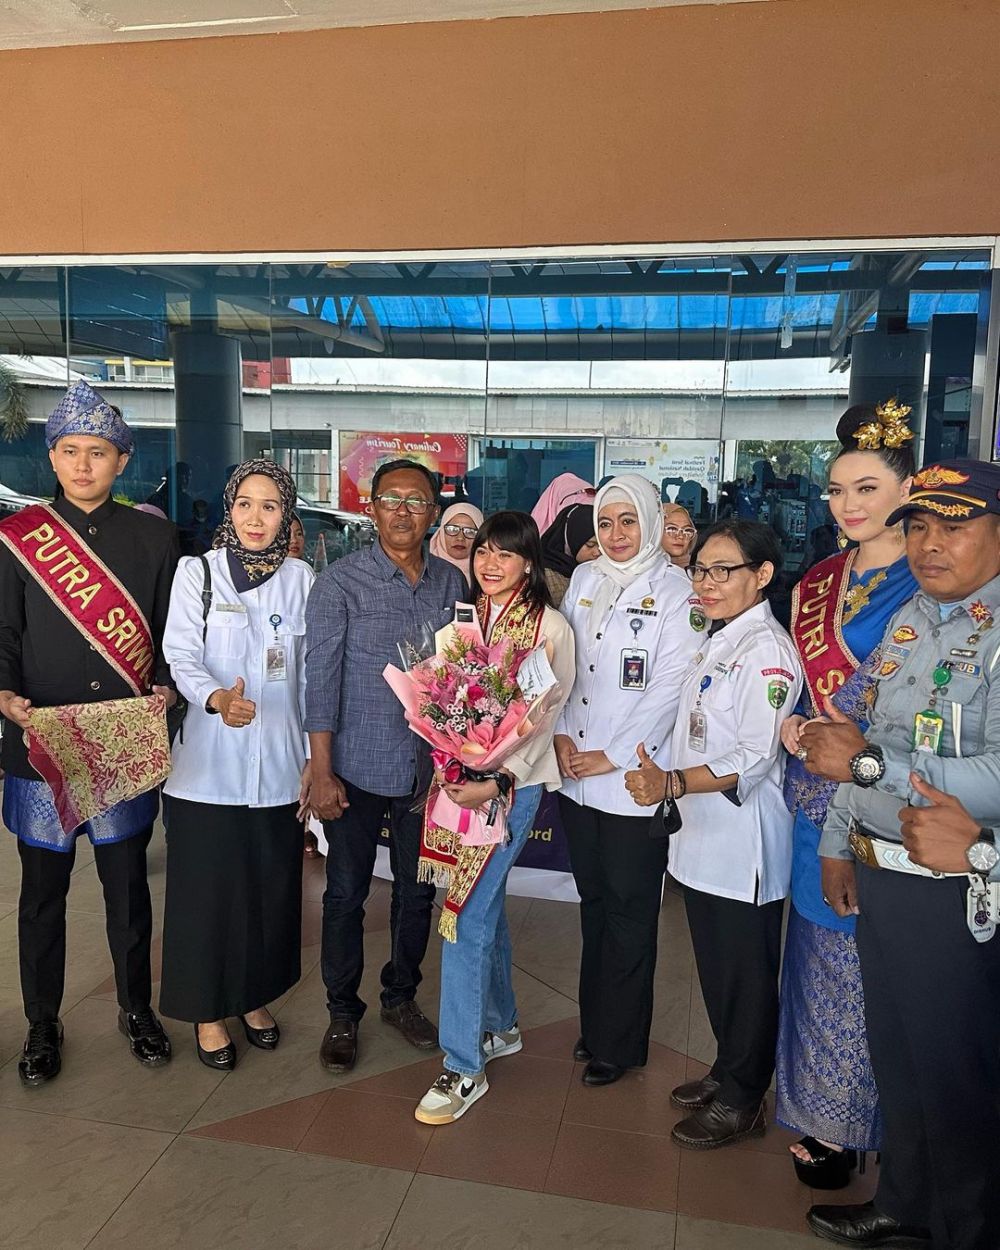 11 Momen Sridevi juara D'Academy 5 pulang ke Prabumulih, diarak keliling kampung